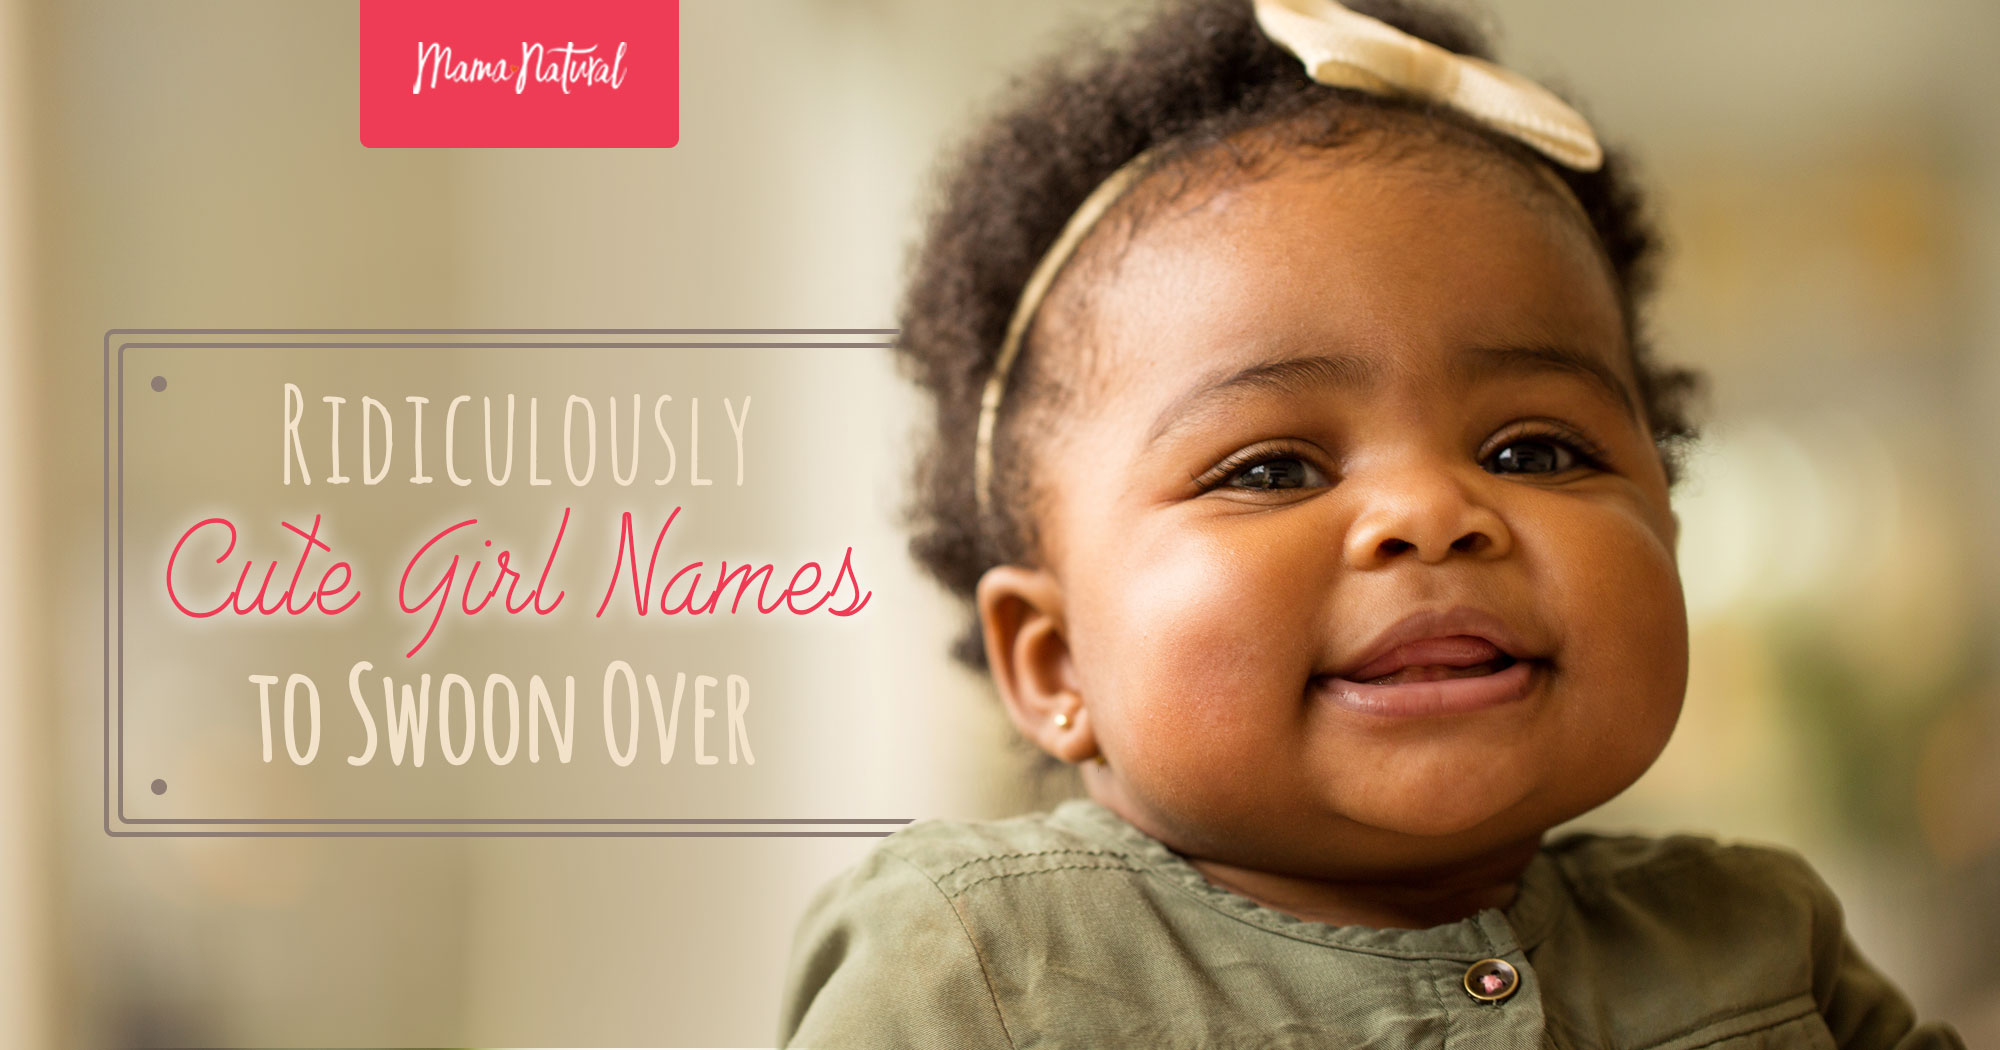 Riley Baby Name  Baby names, Baby girl names, Names